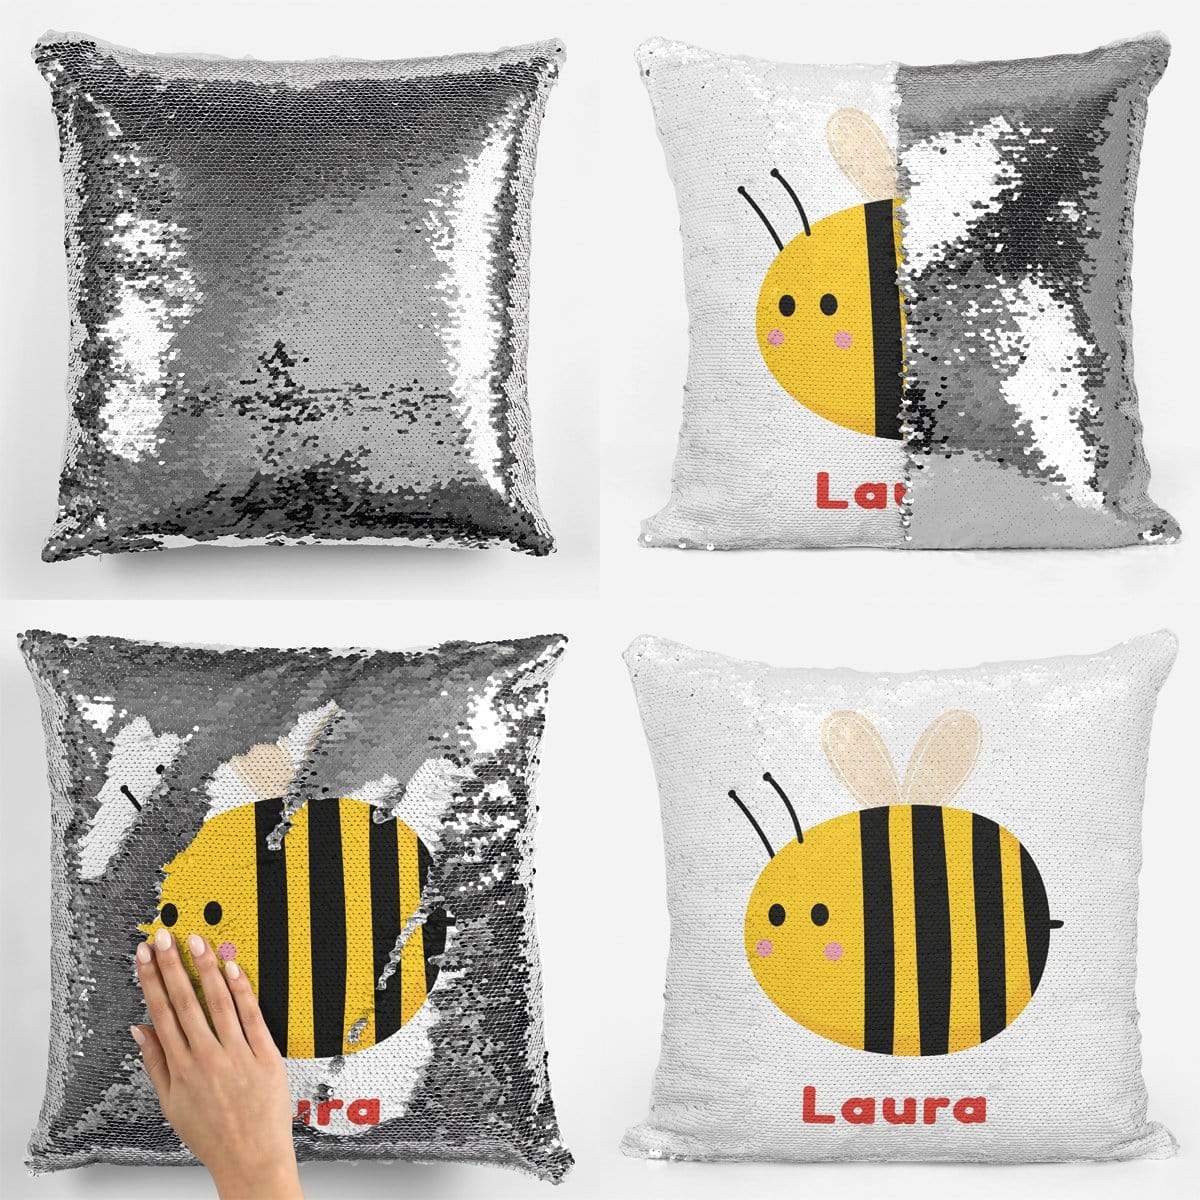 Bumble Bee Name Sequin Magic Cushion